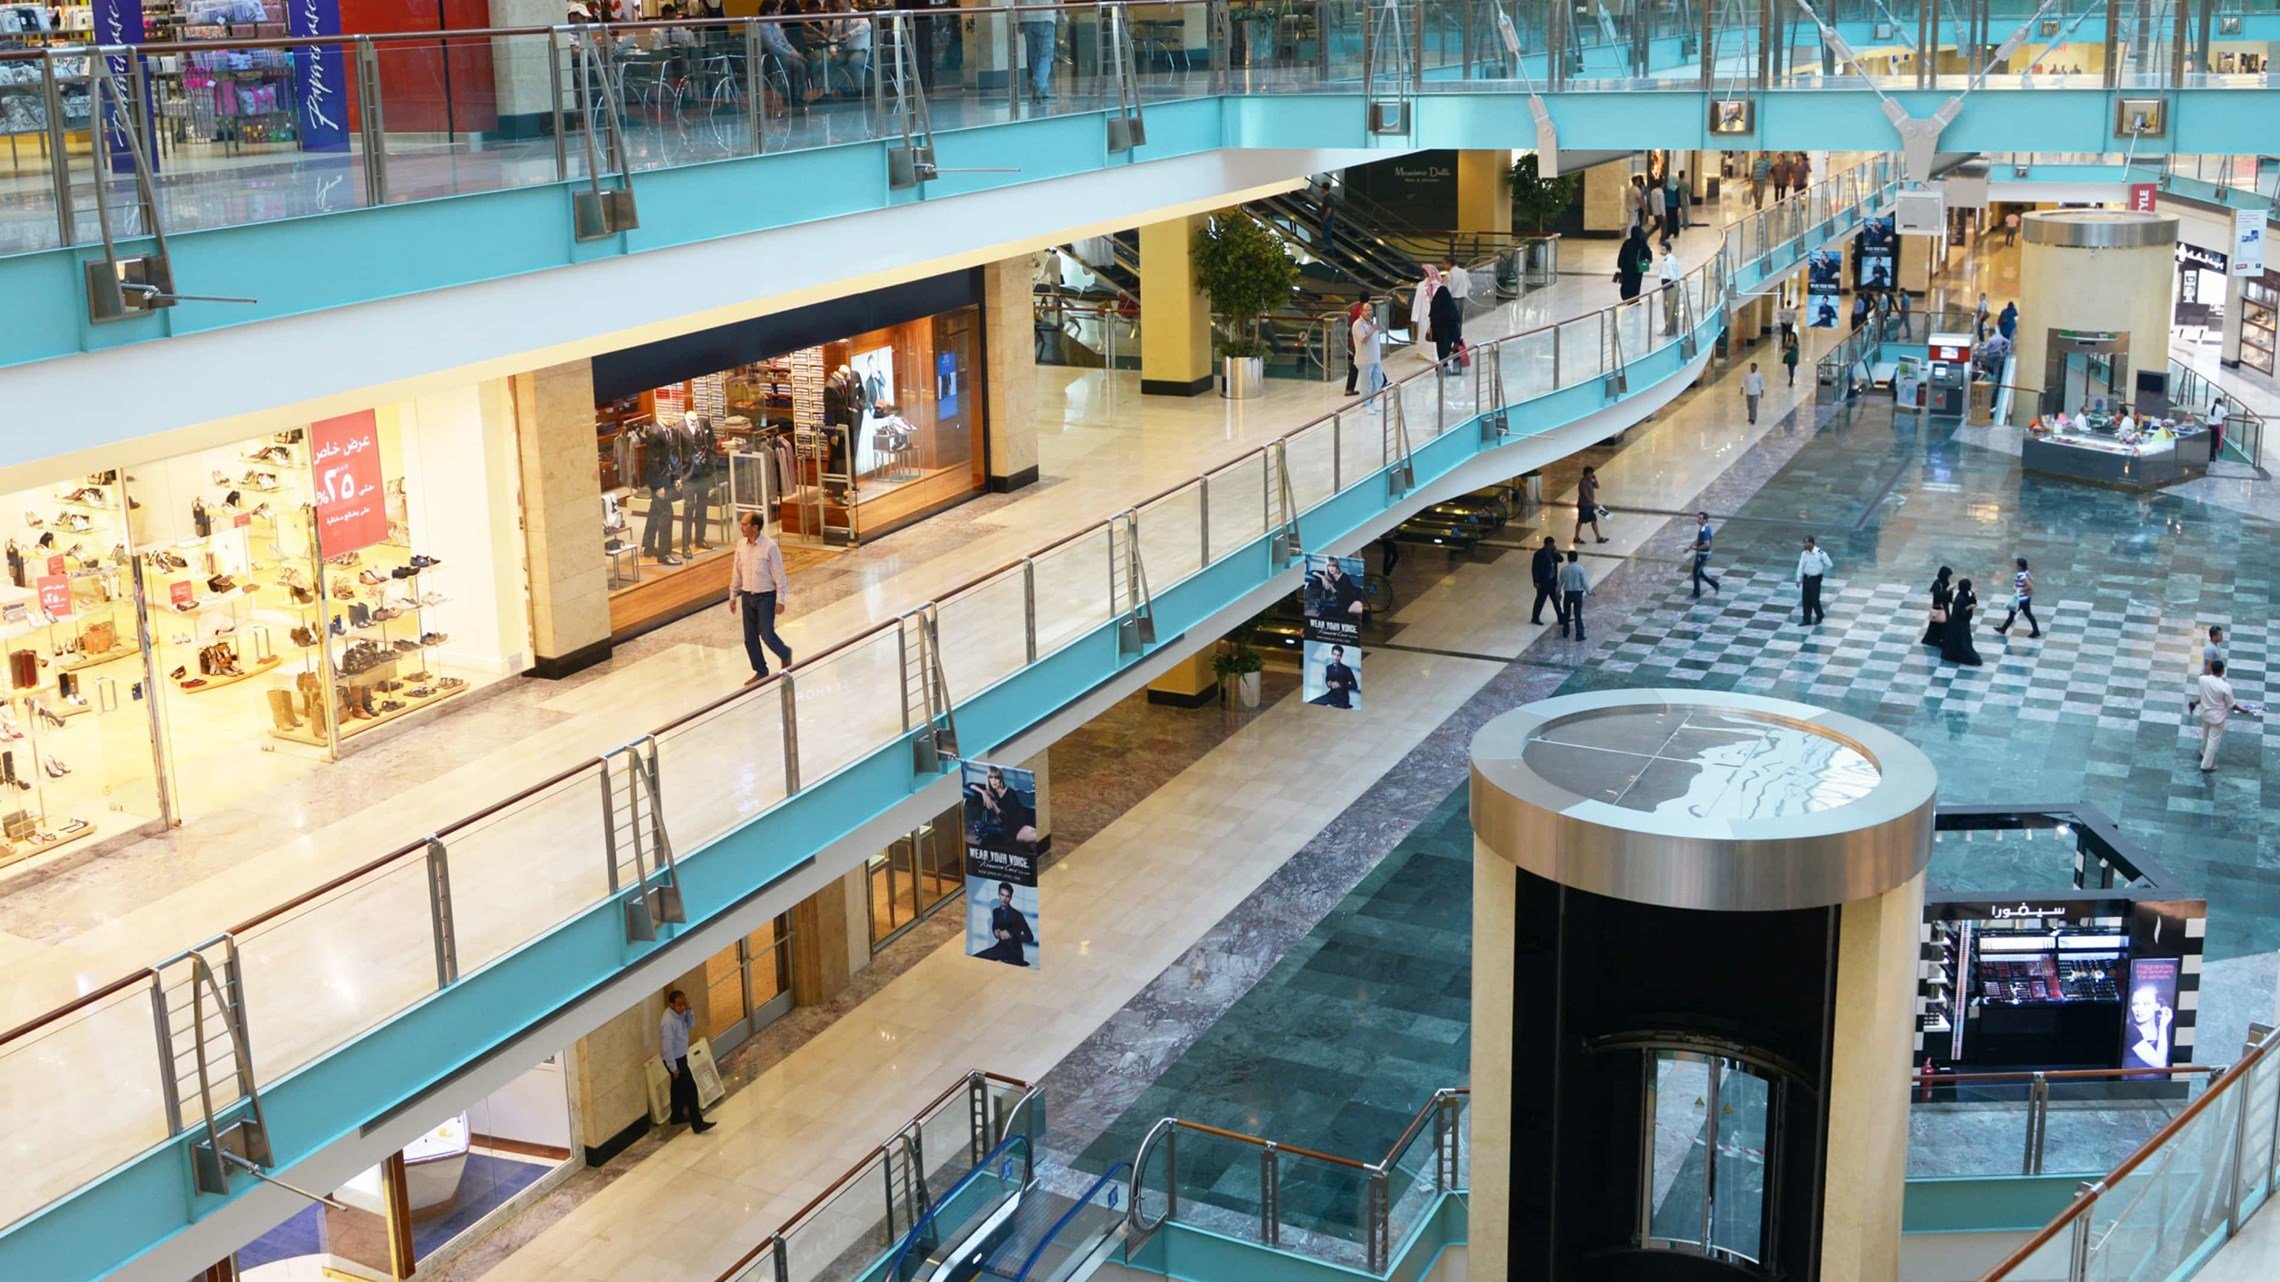 8. Abu Dhabi Mall